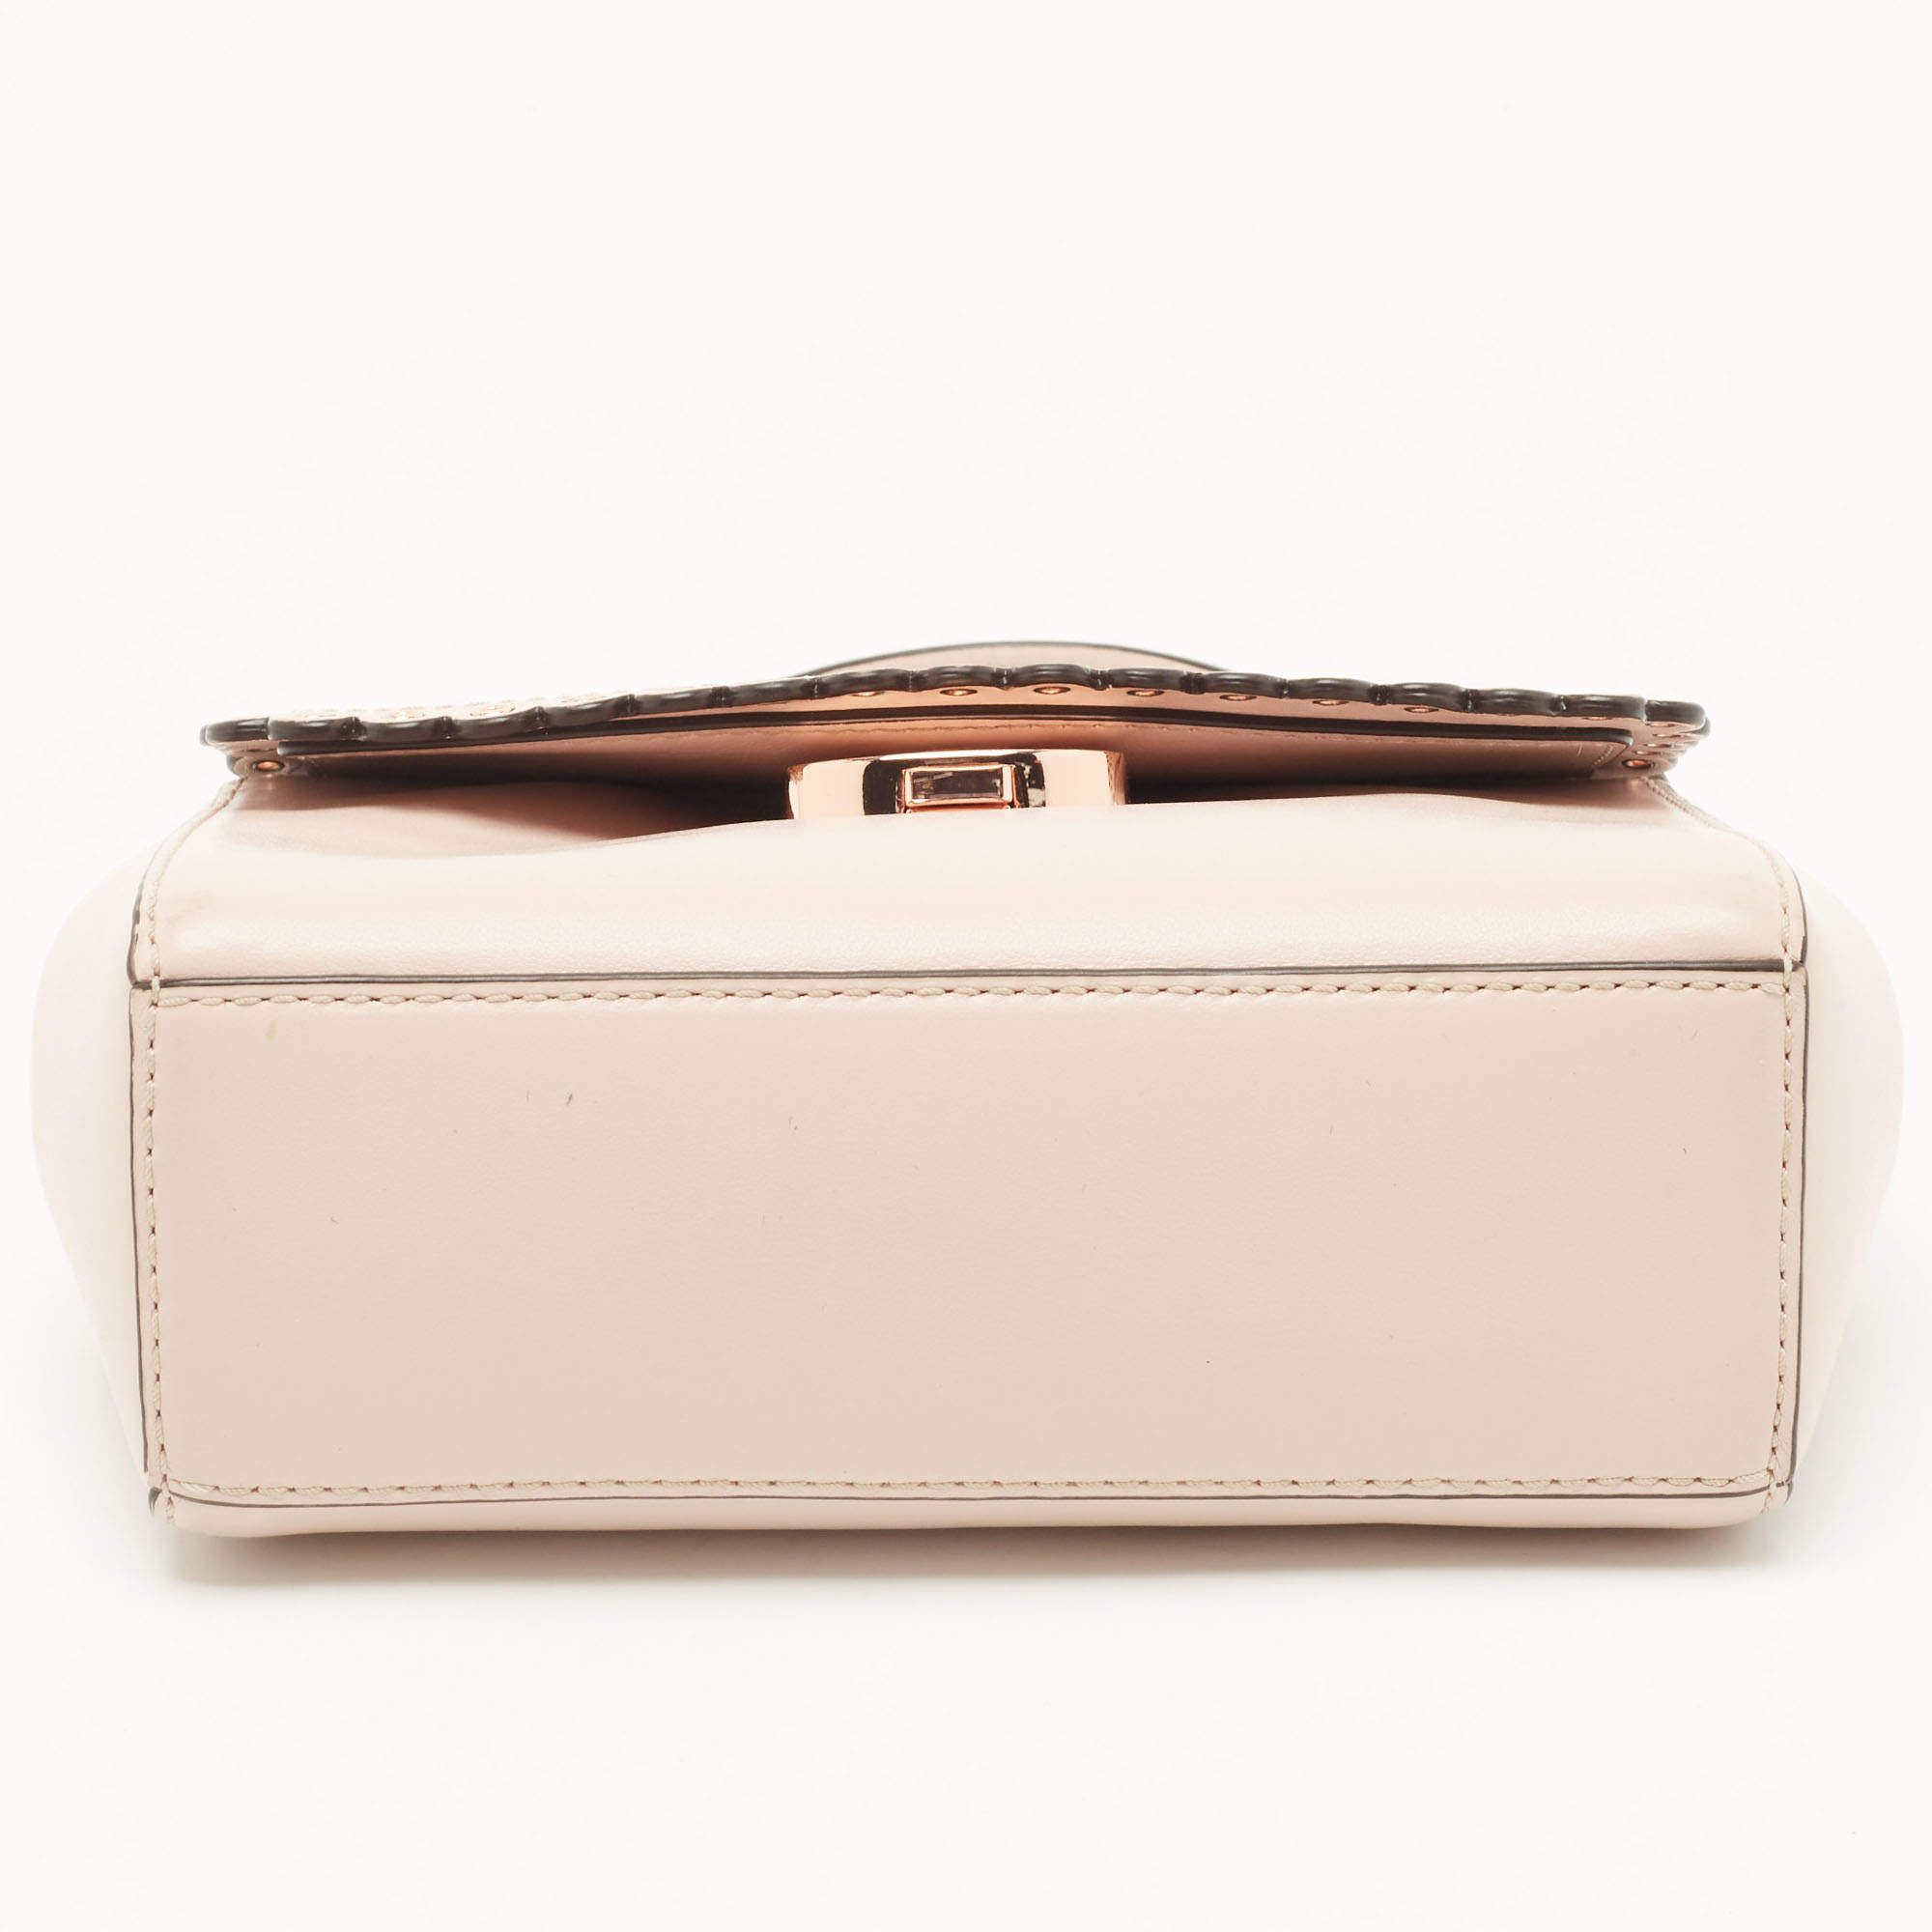 Michael Kors Pink Leather Small Ava Top Handle Bag Michael Kors | The  Luxury Closet